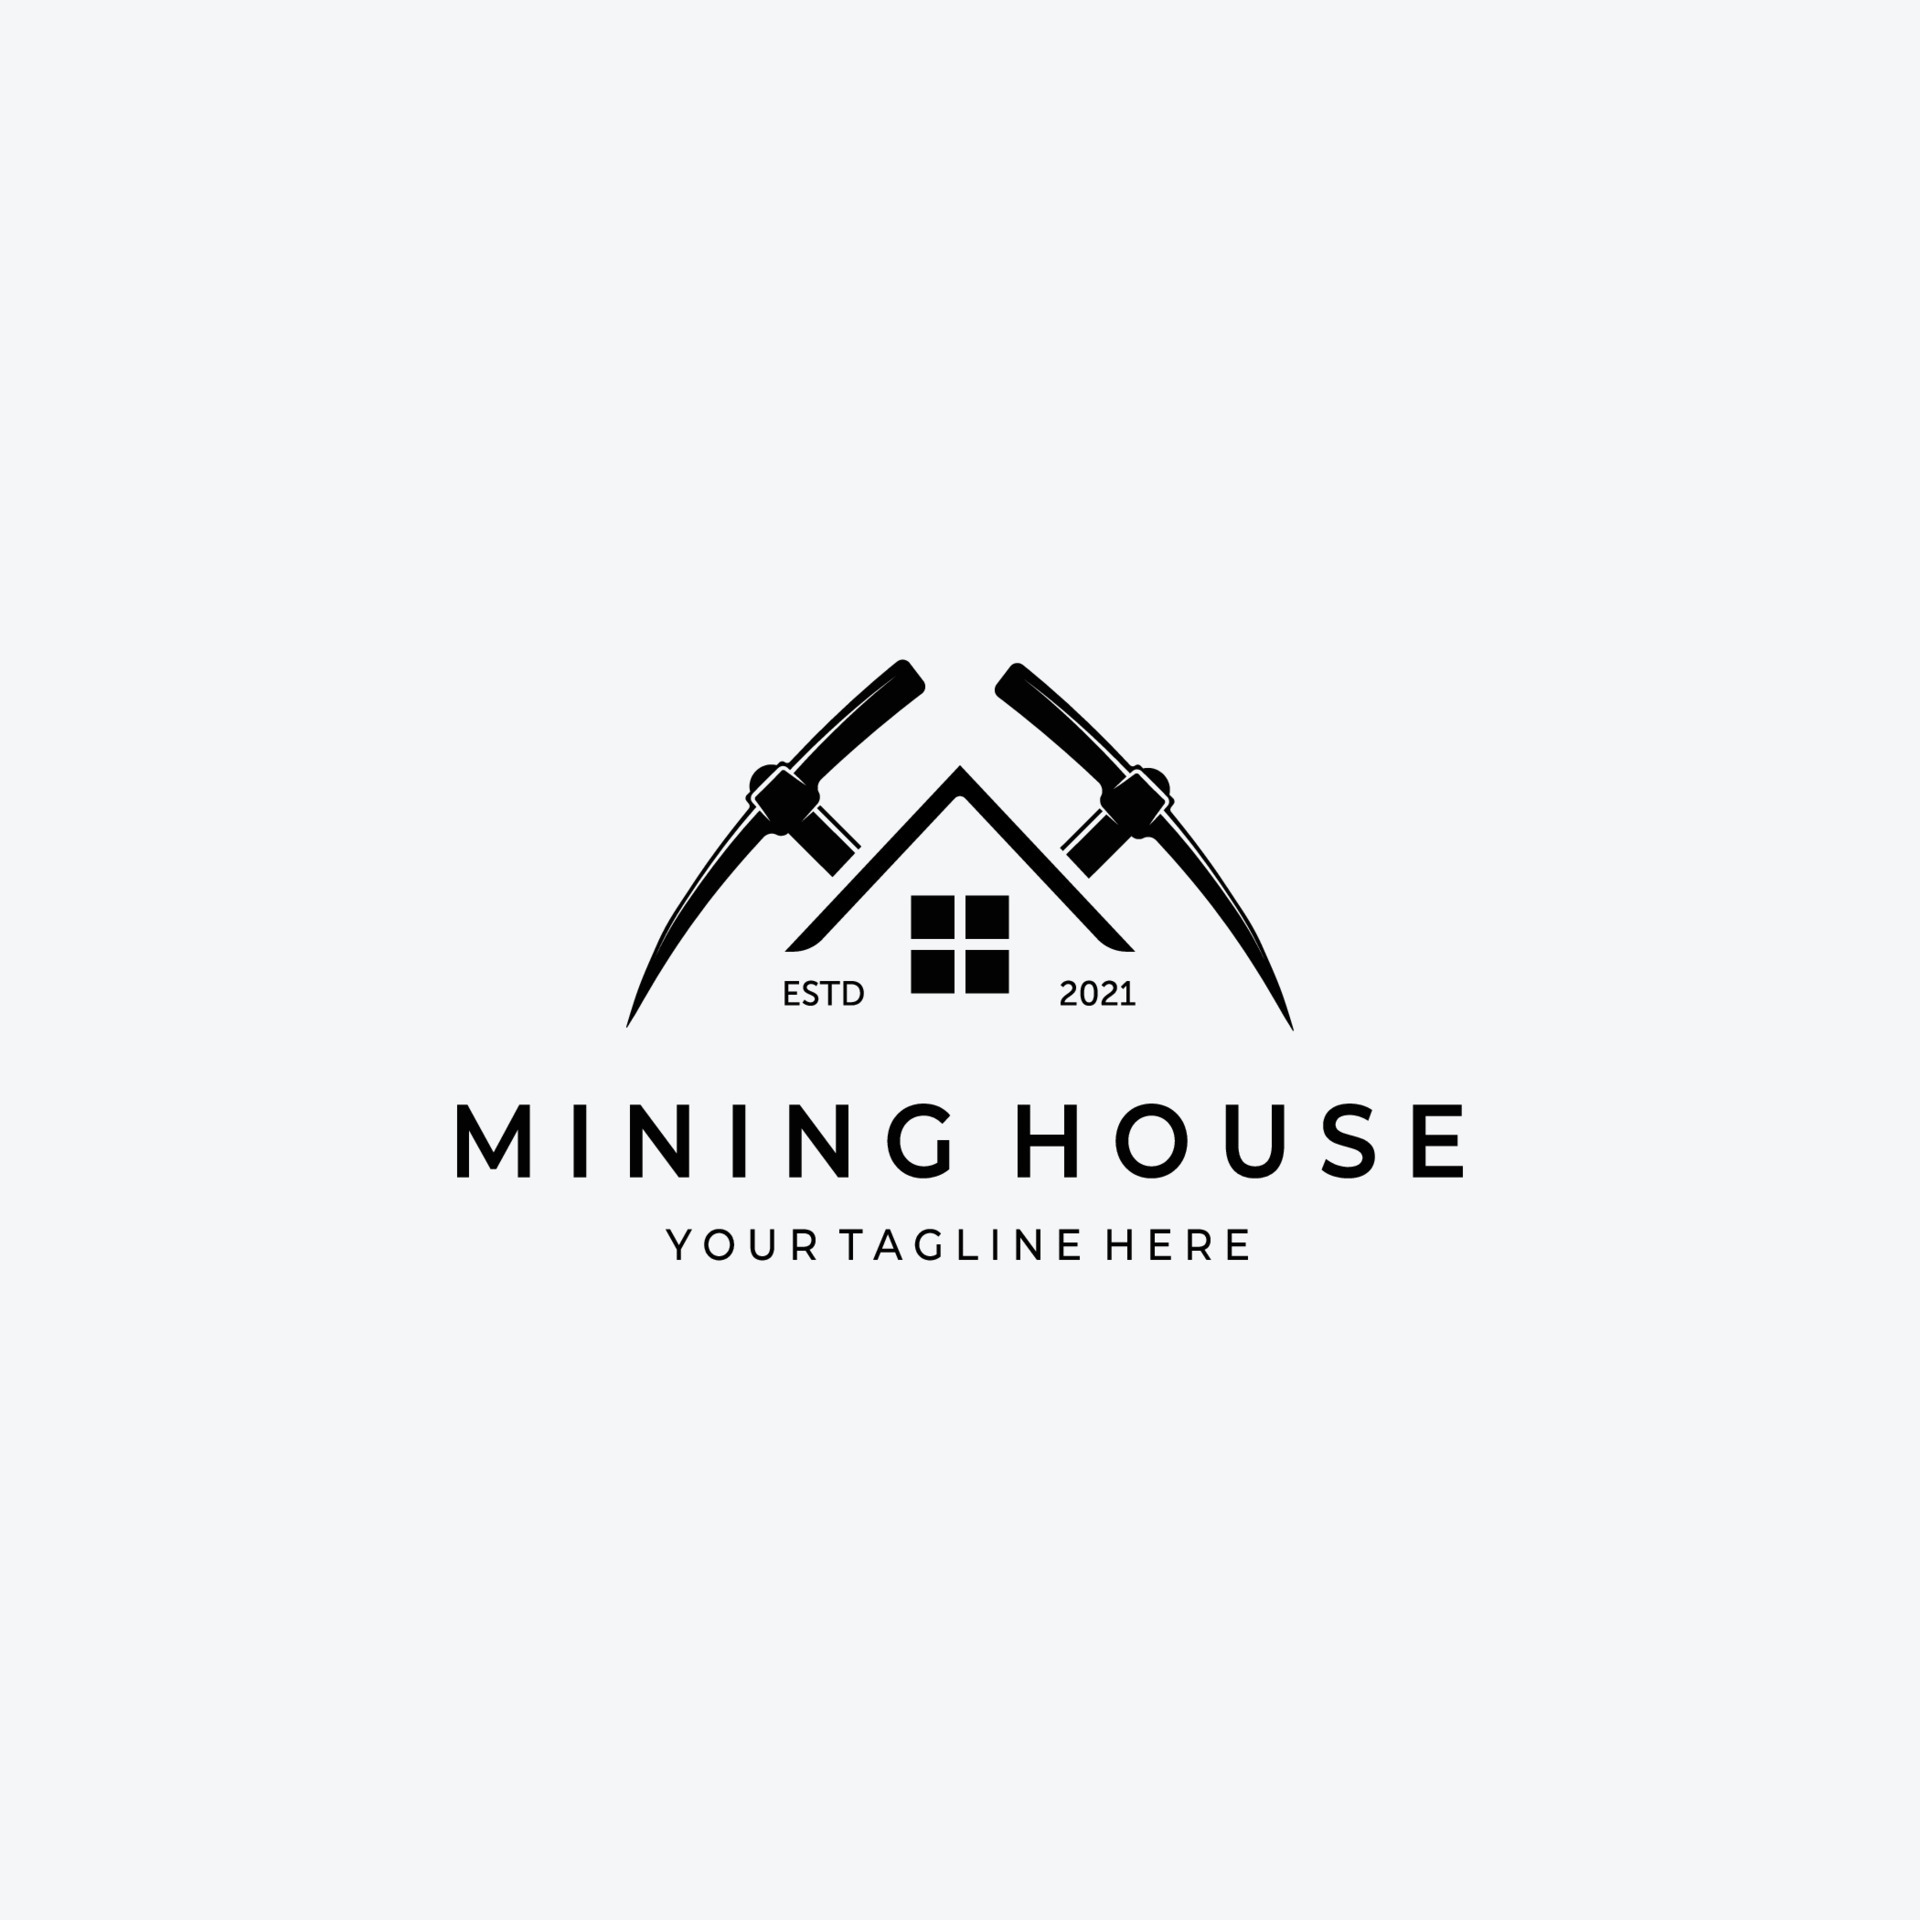 Mining house